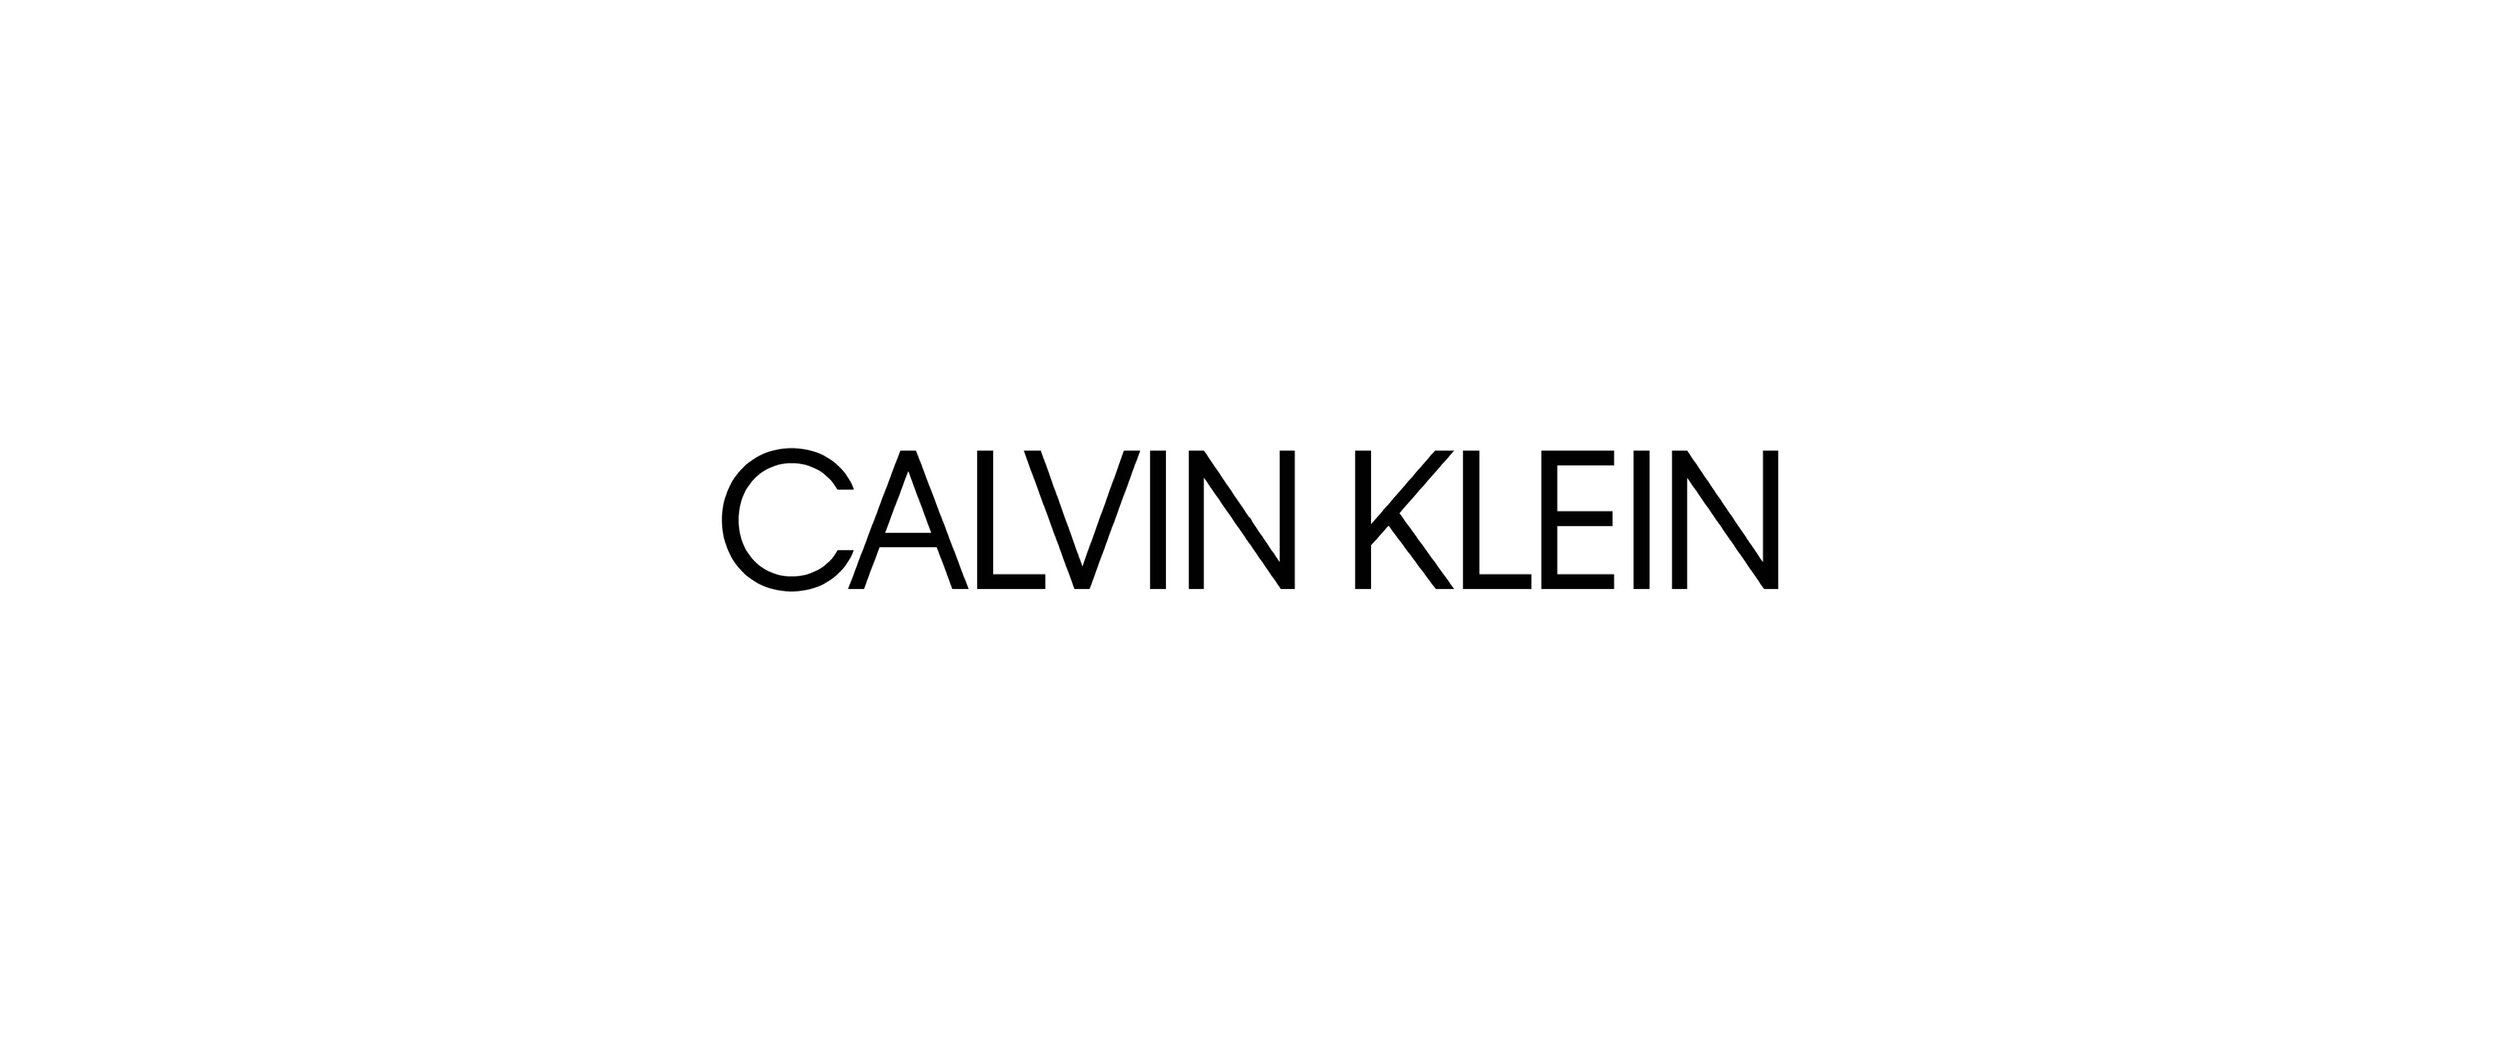 Calvin Klein H19 Botiga Reus (copia)